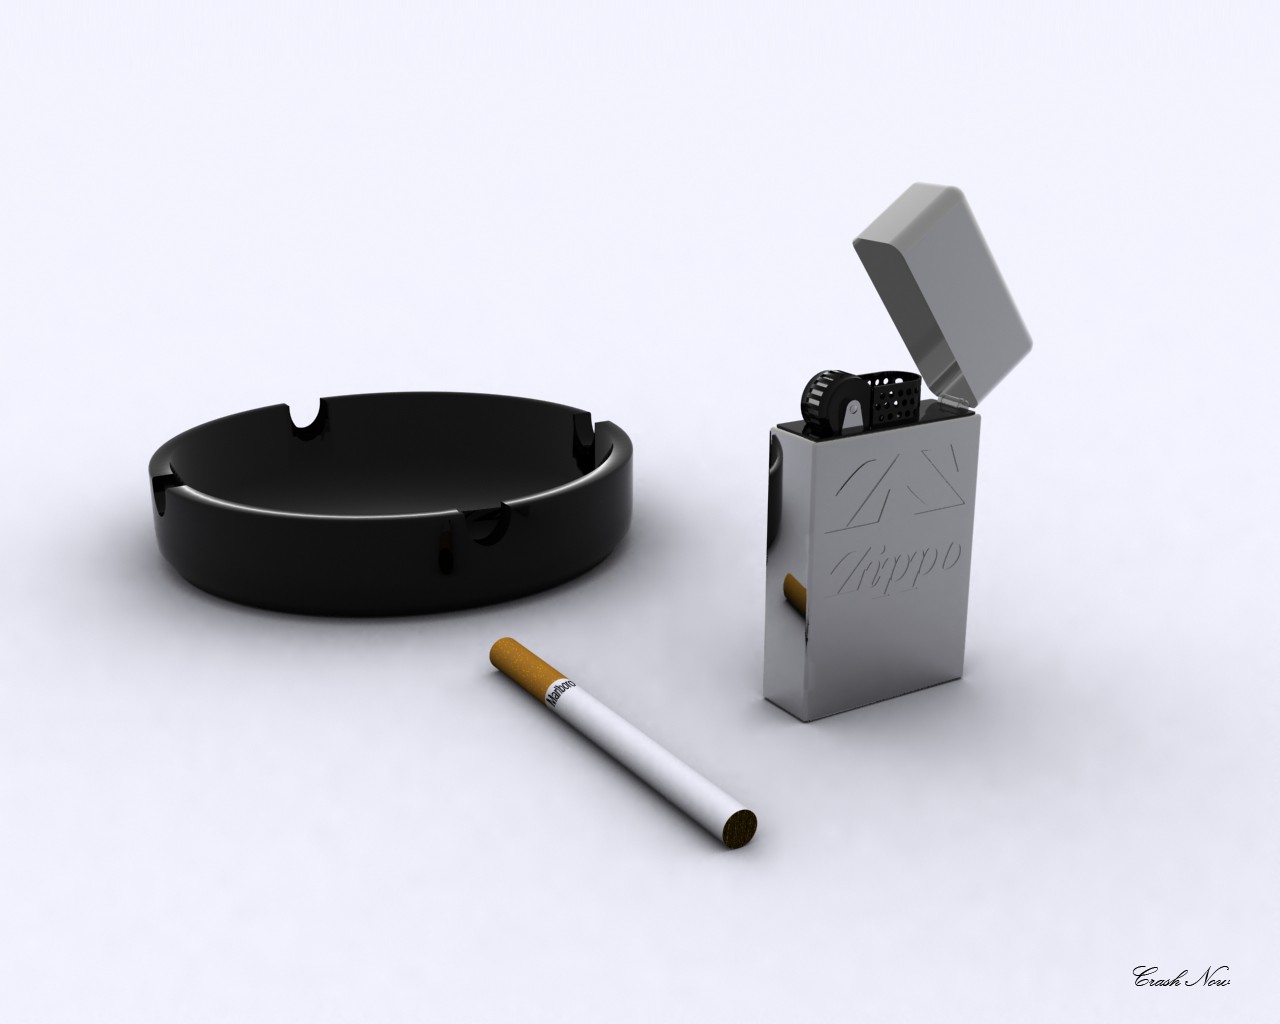 ... Lighter and Cigarette HD Wallpaper , HD Desktop Wallpaper for free